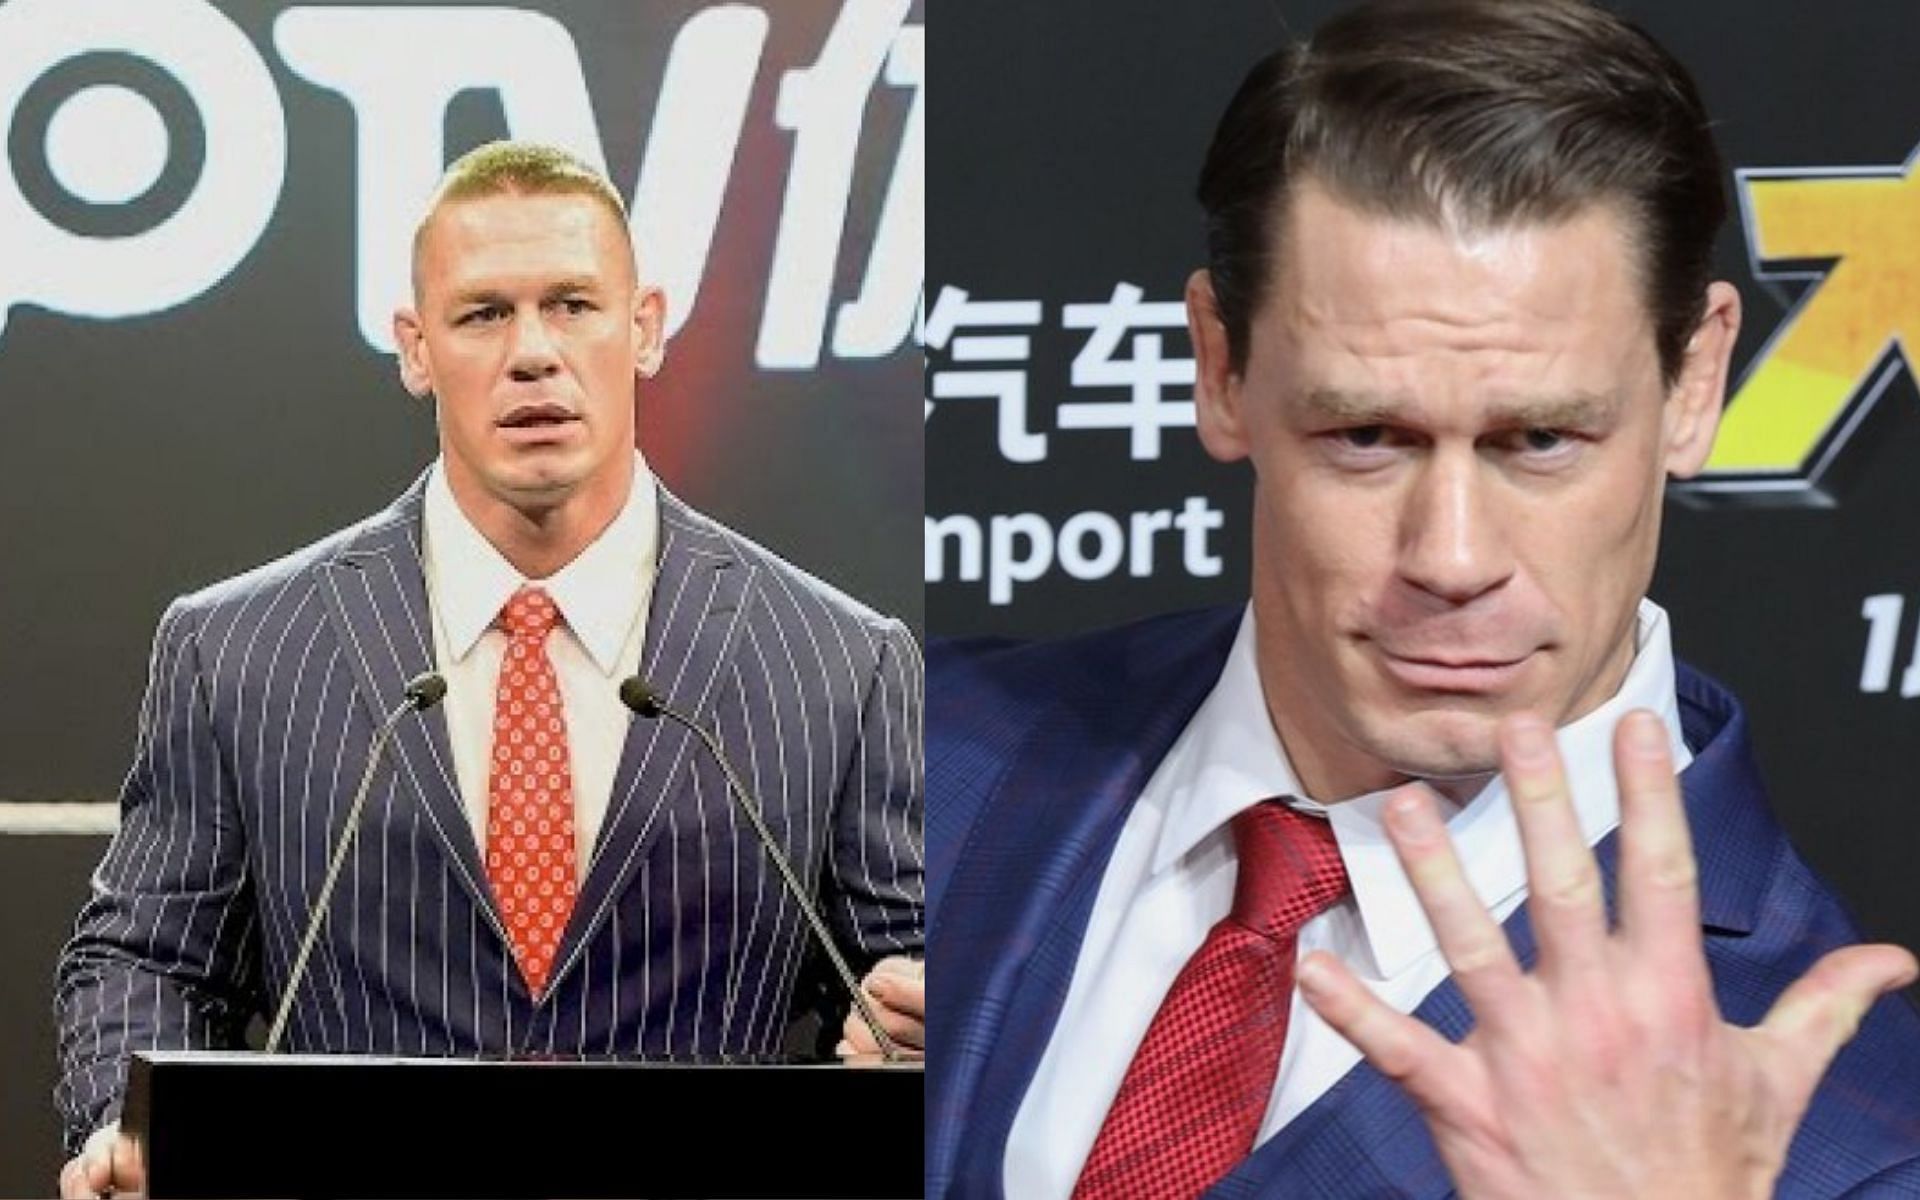 Why did WWE veteran John Cena learn Chinese?